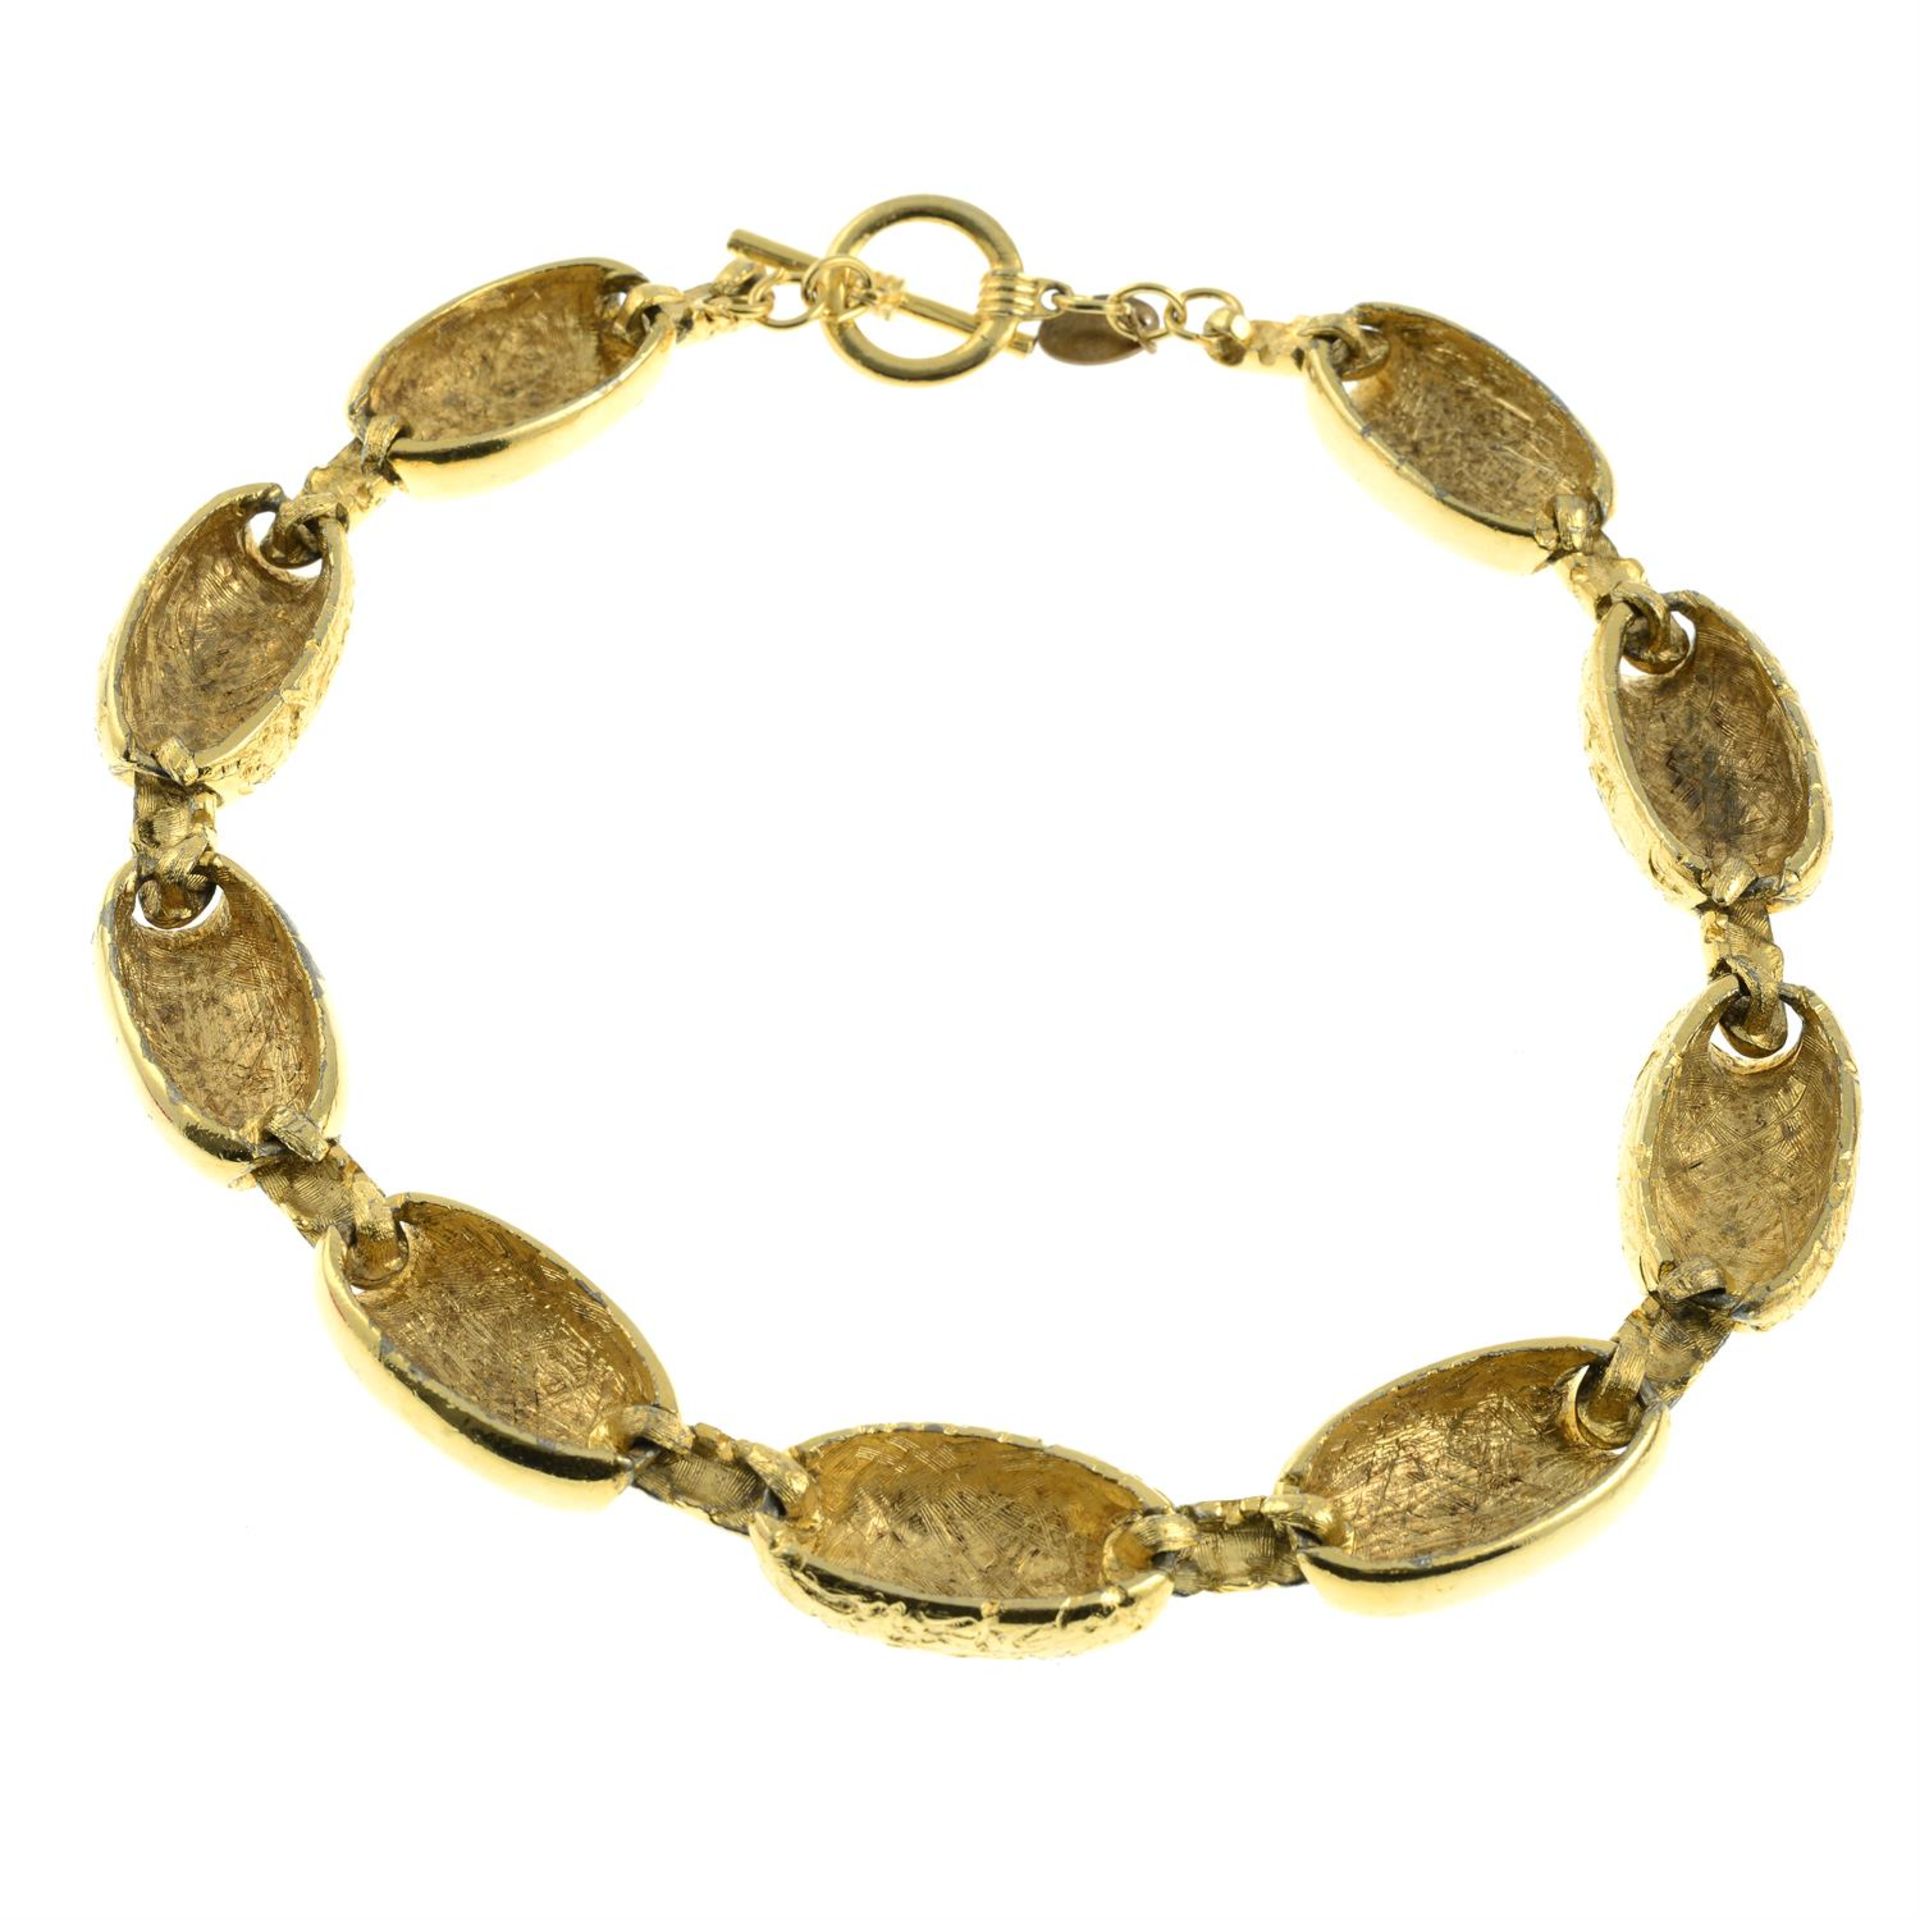 ANNE KLEINE- a necklace. - Image 2 of 2